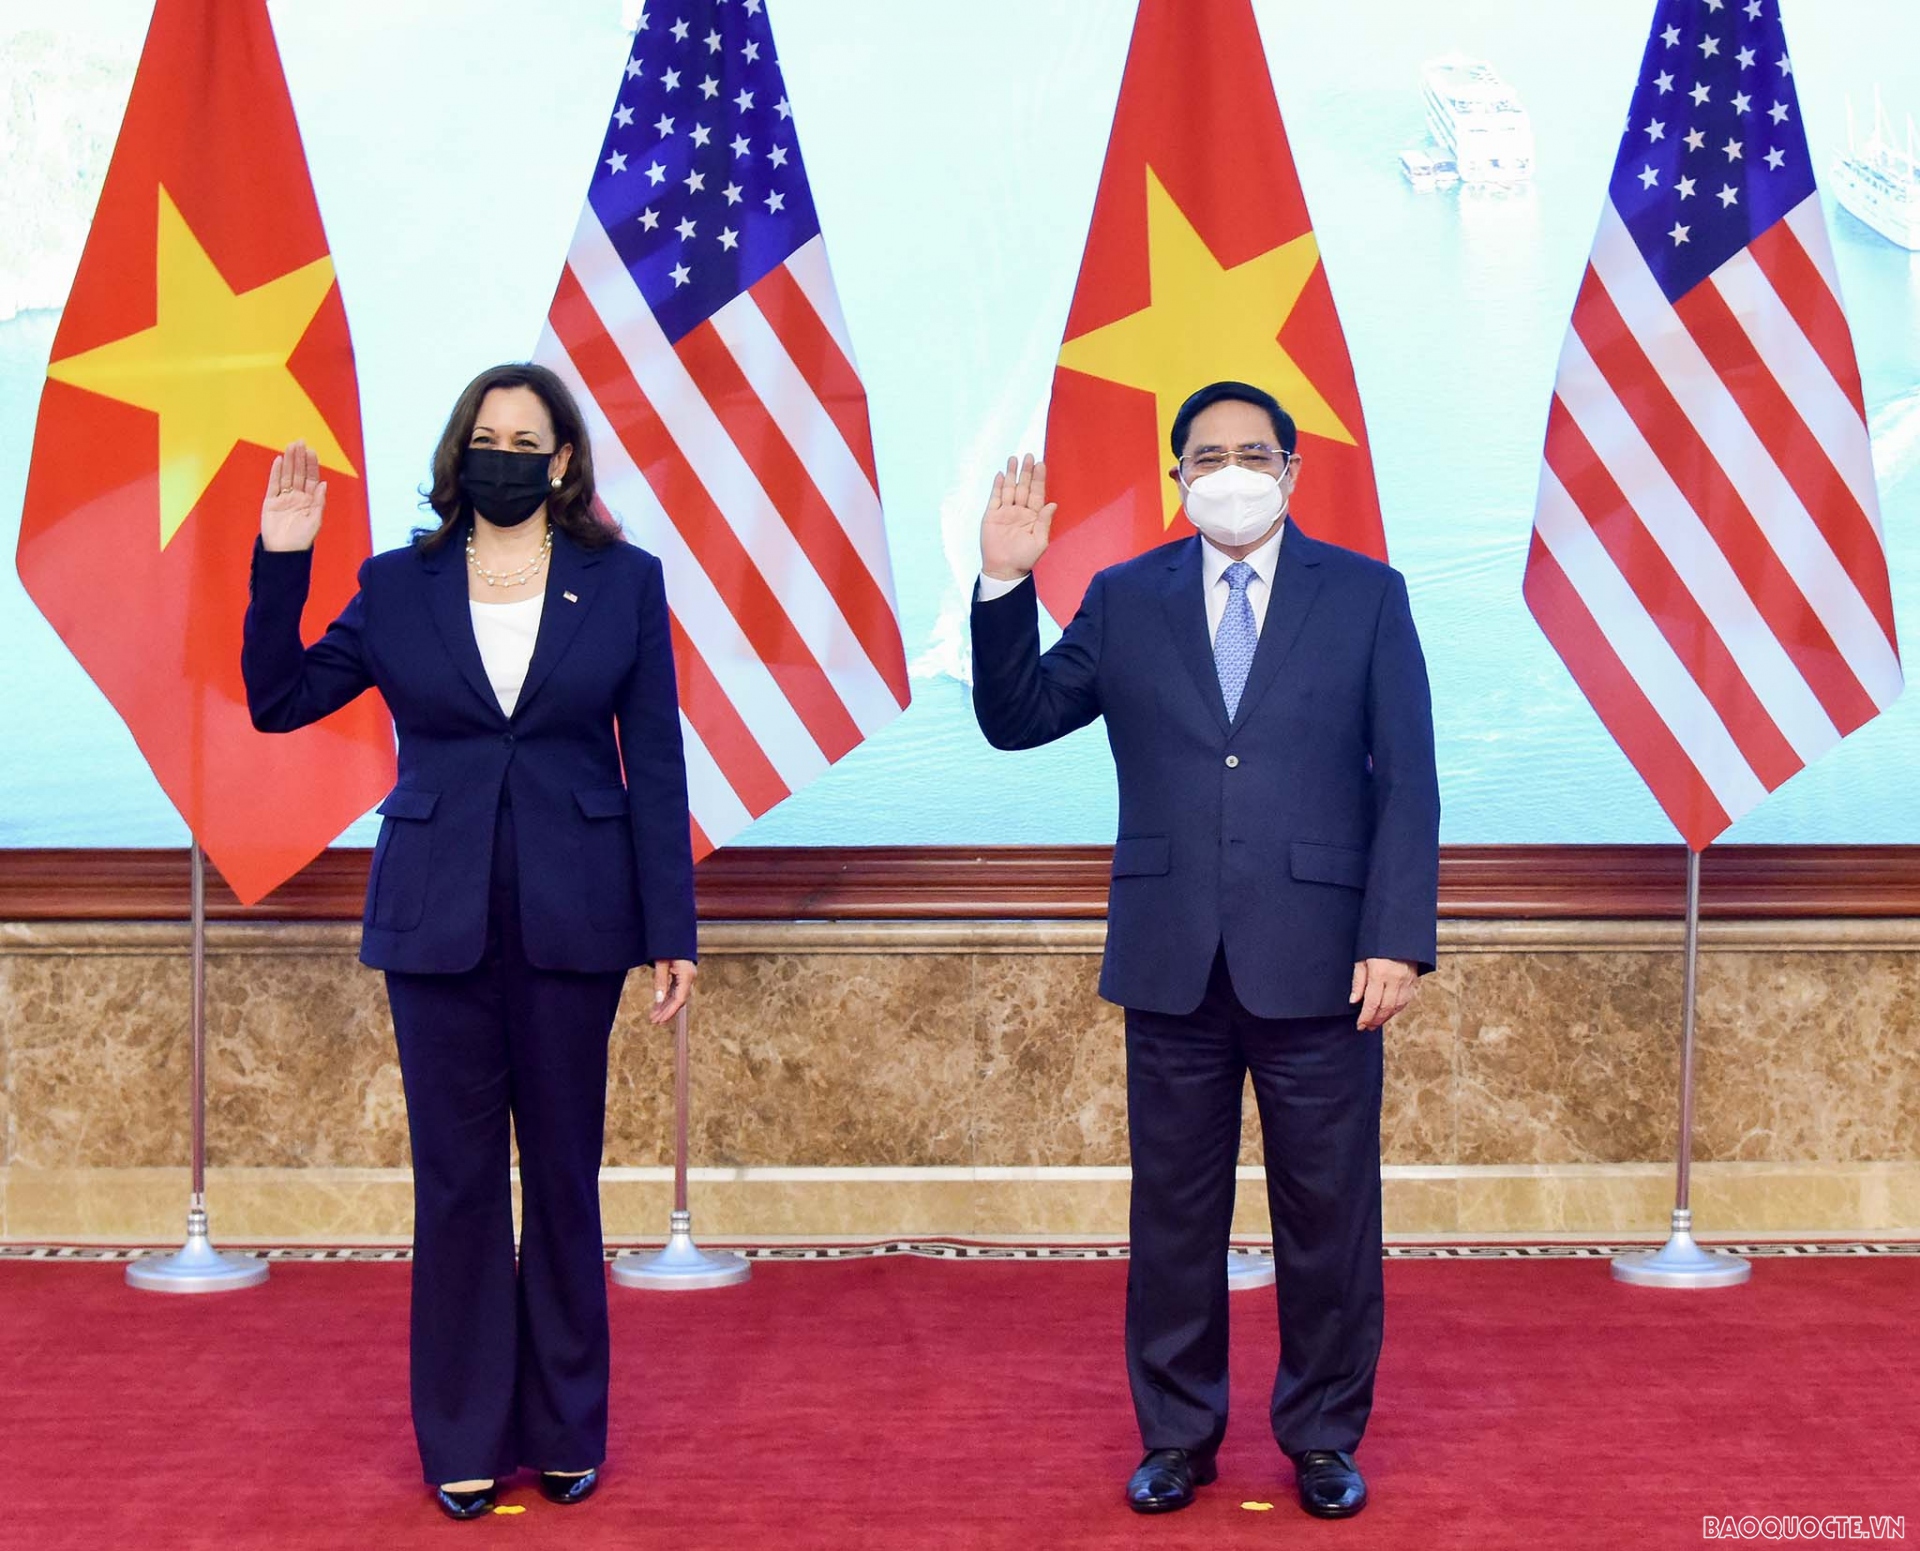 PM Pham Minh Chinh: Vietnam treasures ties with US